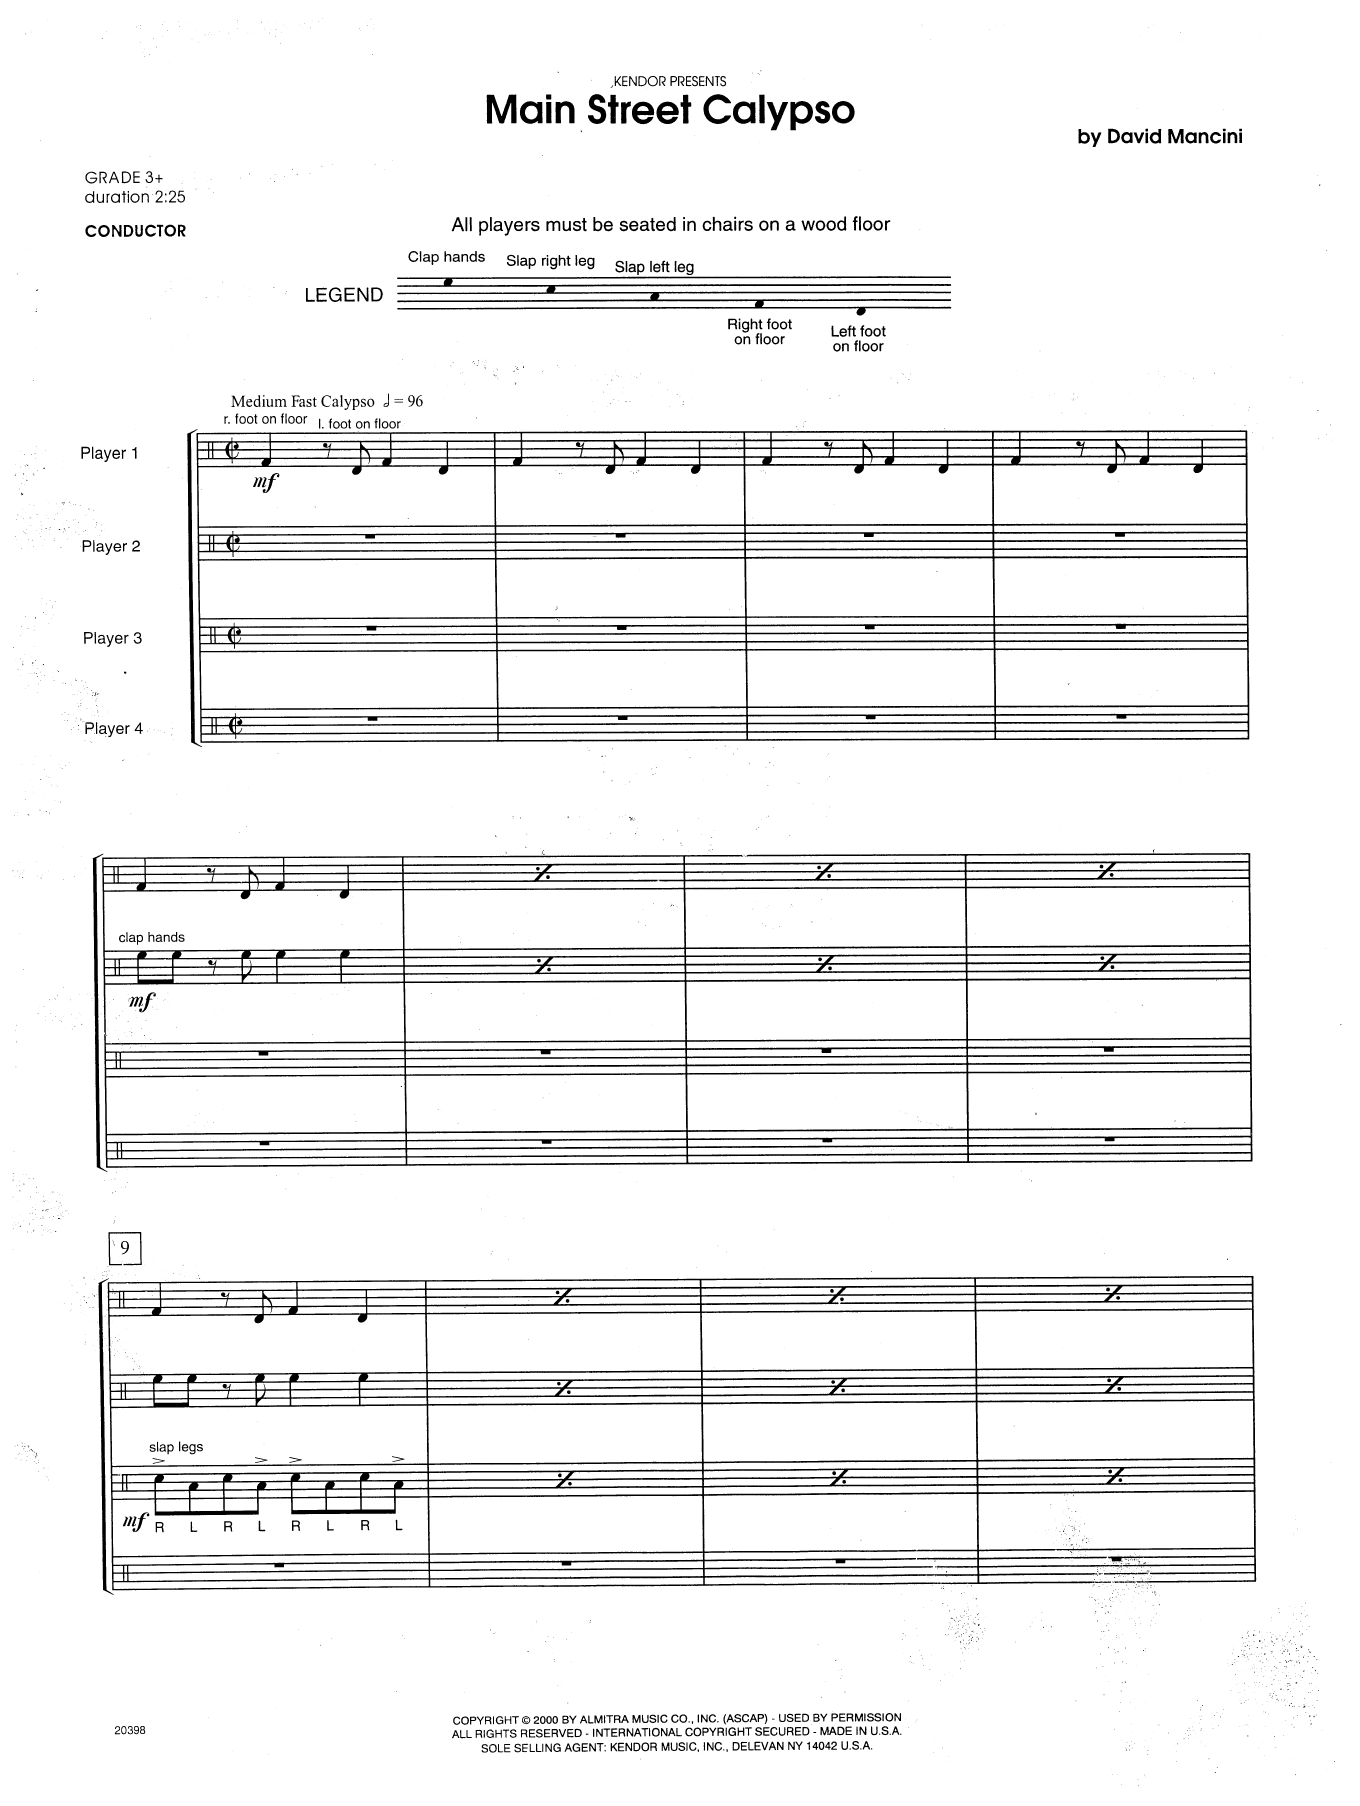 Download Dave Mancini Main Street Calypso - Full Score Sheet Music